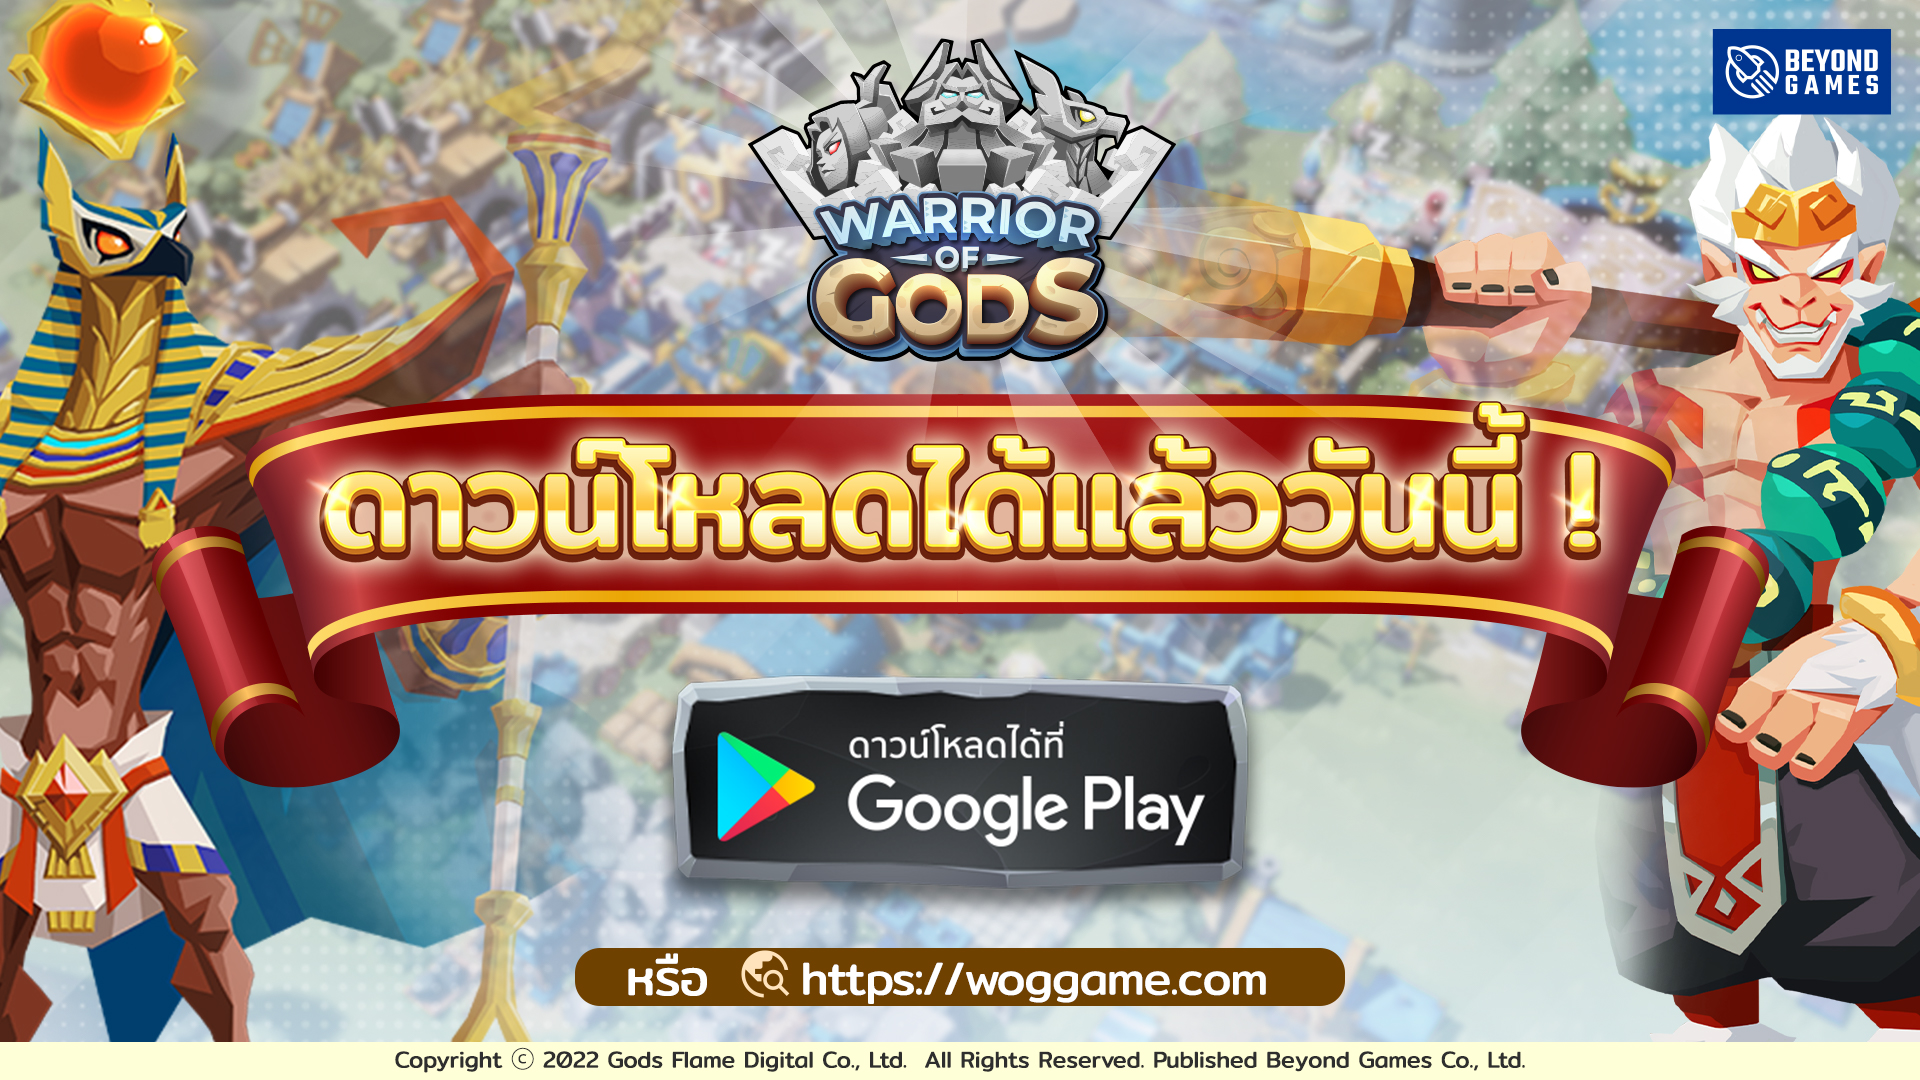 Warrior of Gods ดาวน์โหลดได้แล้ววันนี้ ทาง Google Play Store (AOS) พร้อมกิจกรรมแจกไอเทมเพียบ !